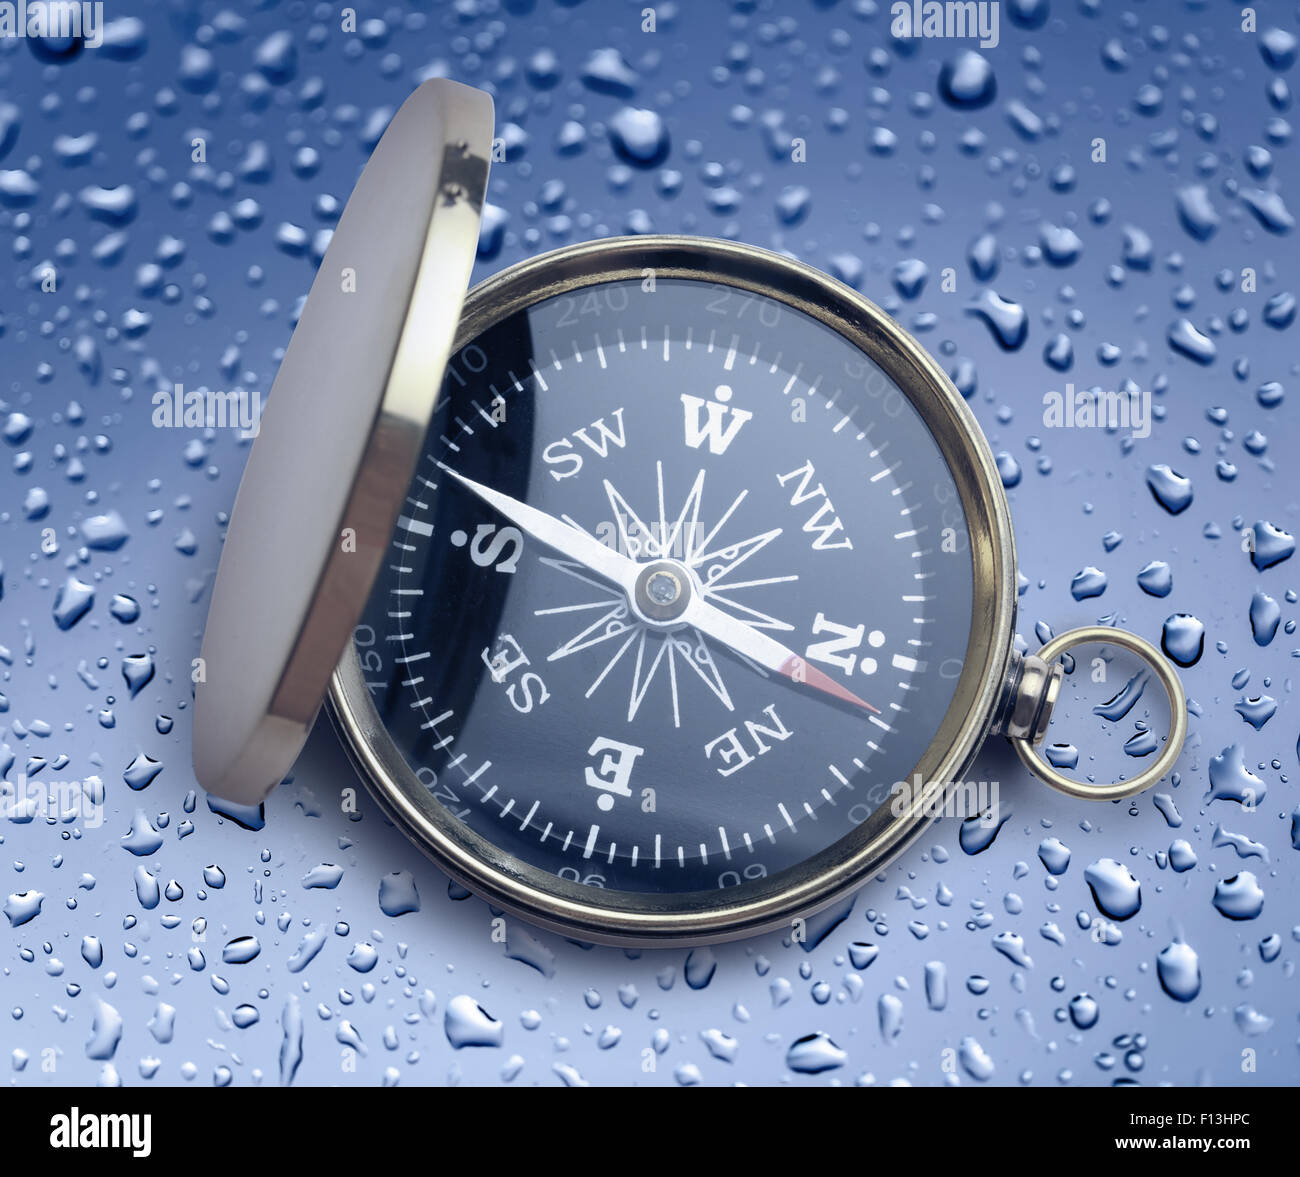 Golden vintage compass opened on raindrop background Stock Photo - Alamy